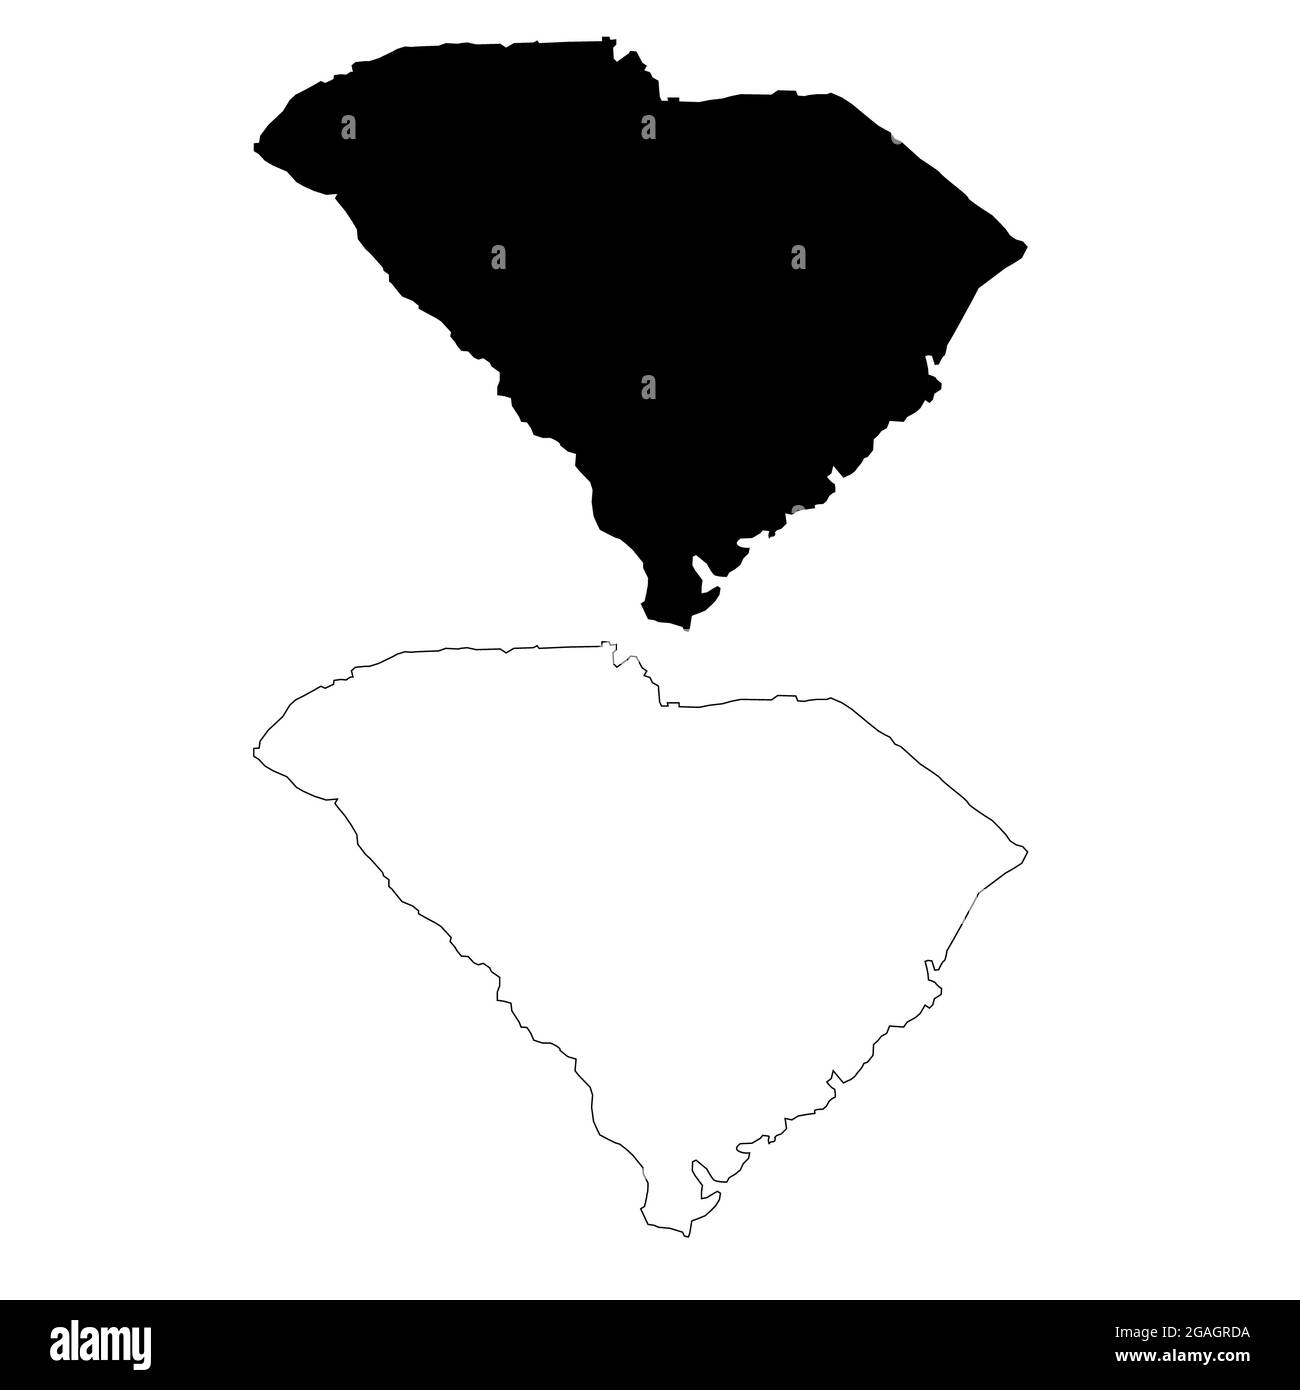 South Carolina map on white background. outline map state USA - South Carolina. South Carolina State sign. flat style. Stock Photo